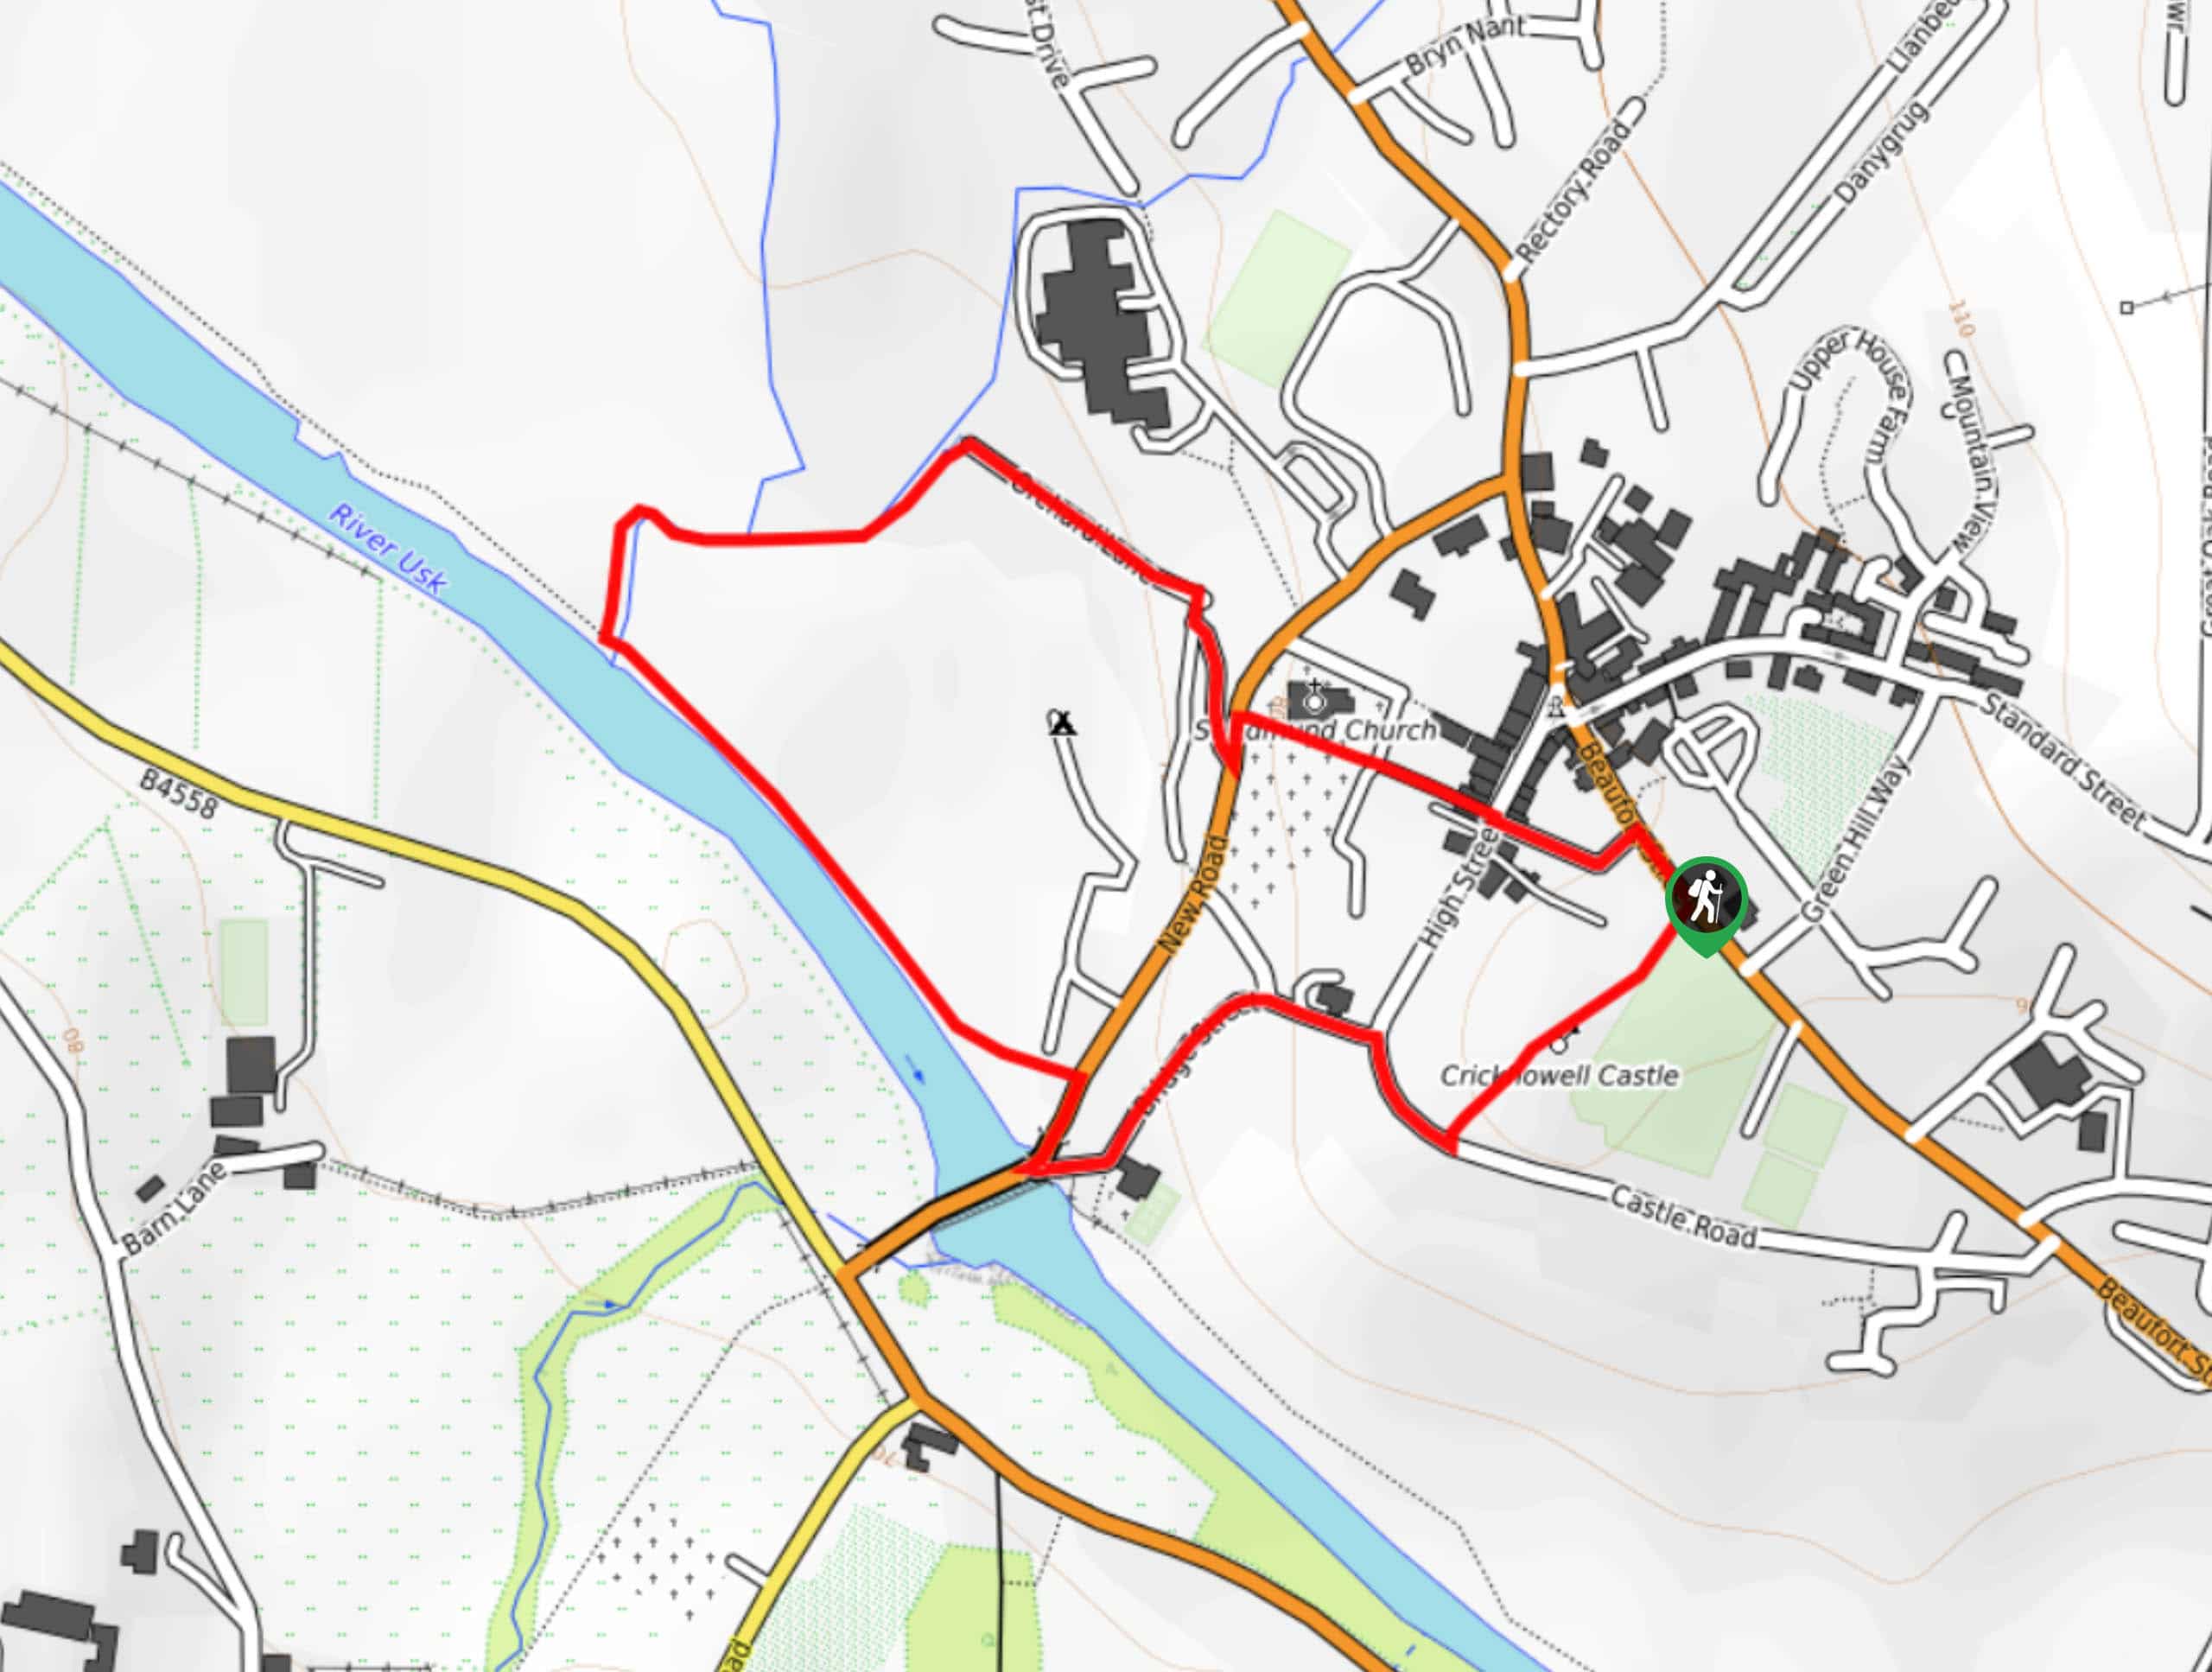 Crickhowell Castle and River Usk Circular Walk Map